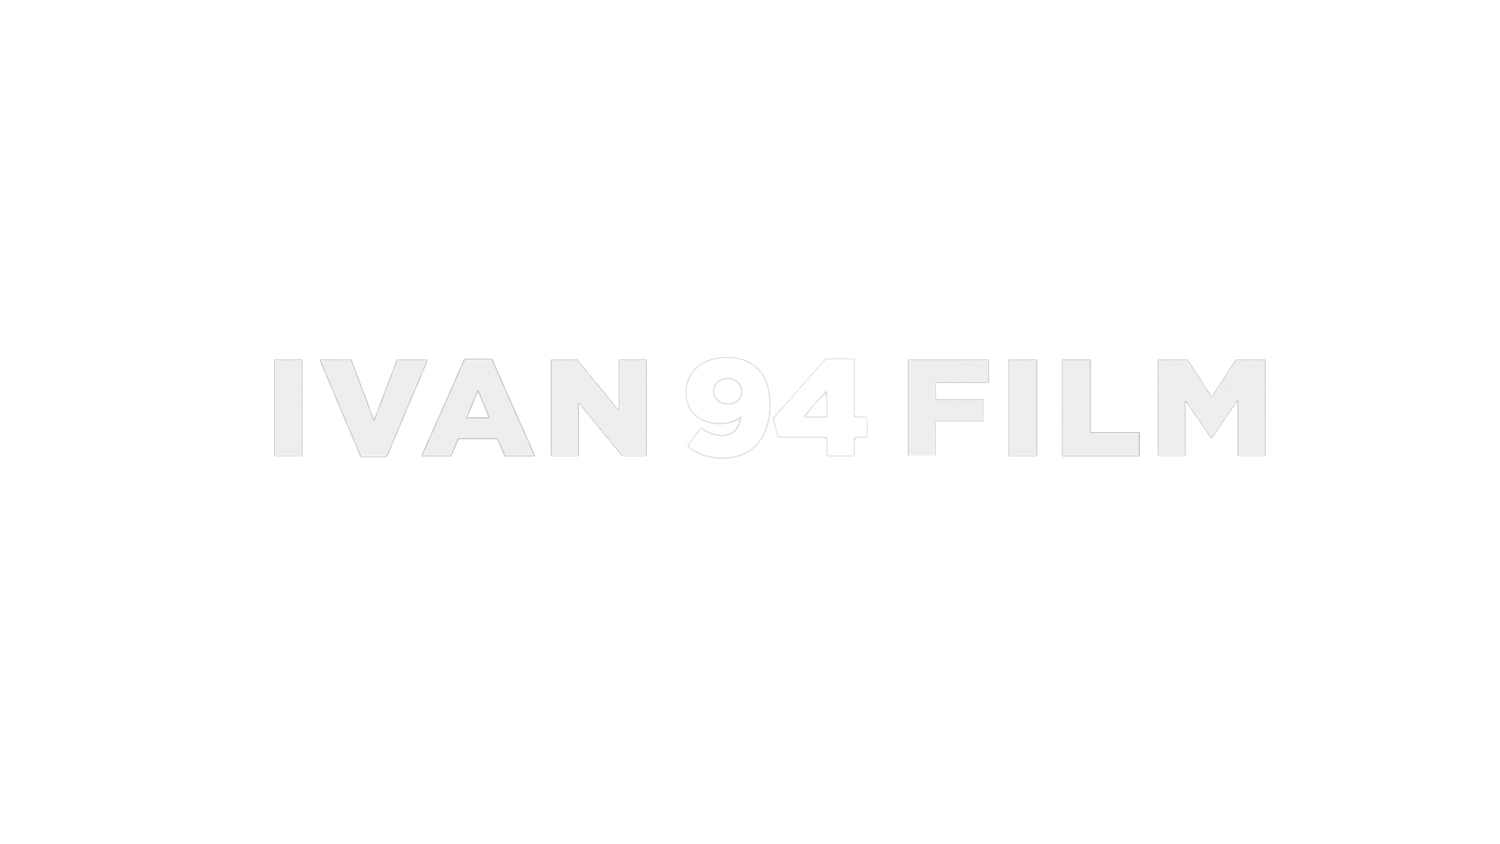 IVAN94FILM